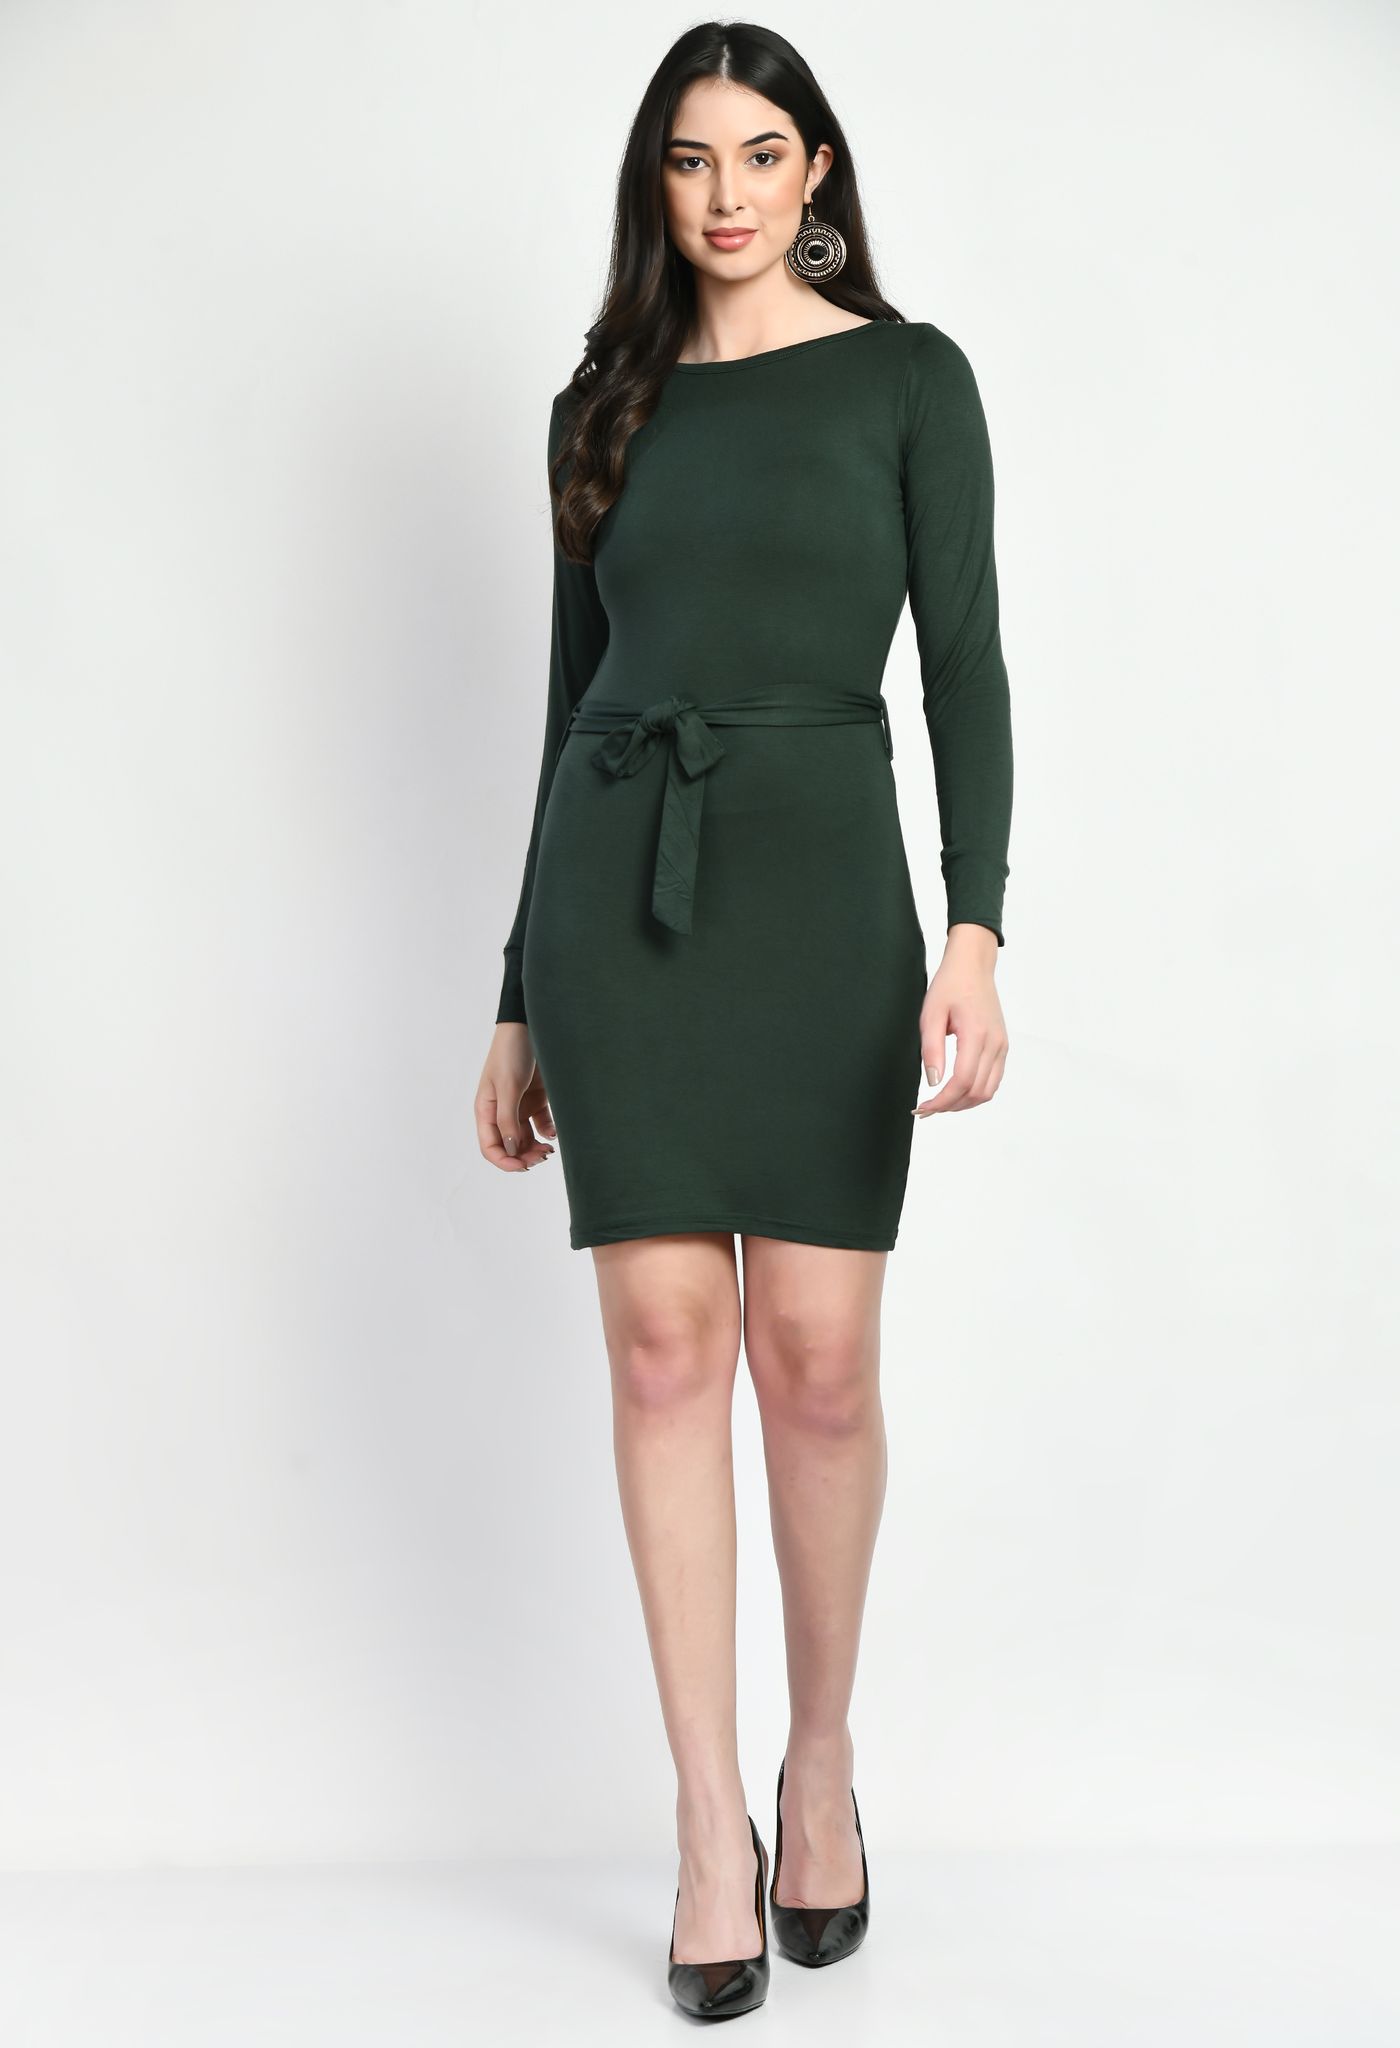 Amazon.com: Emerald Green Dress